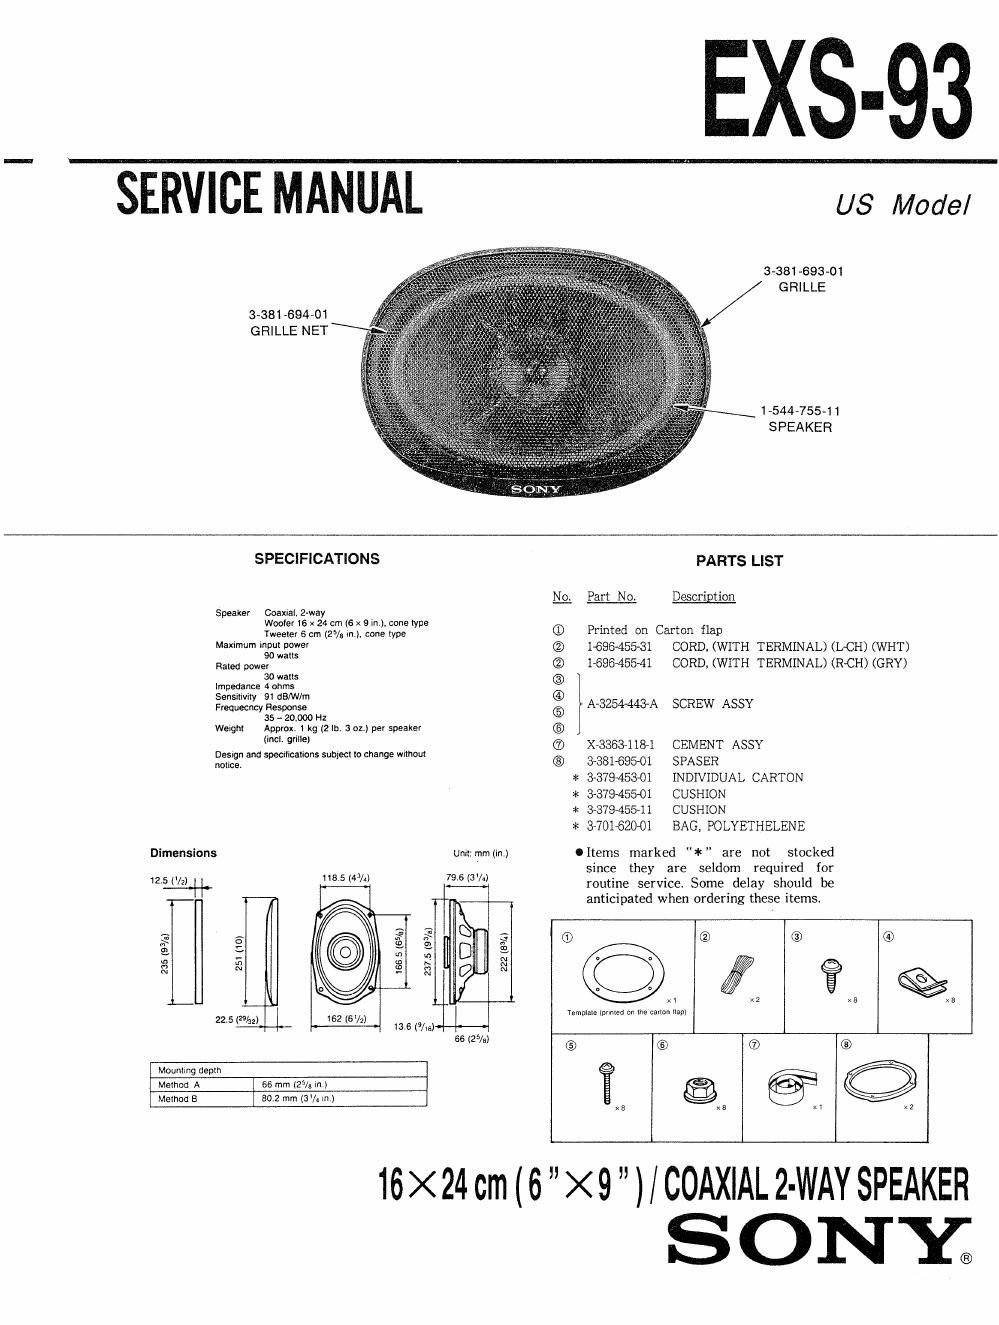 sony exs 93 service manual